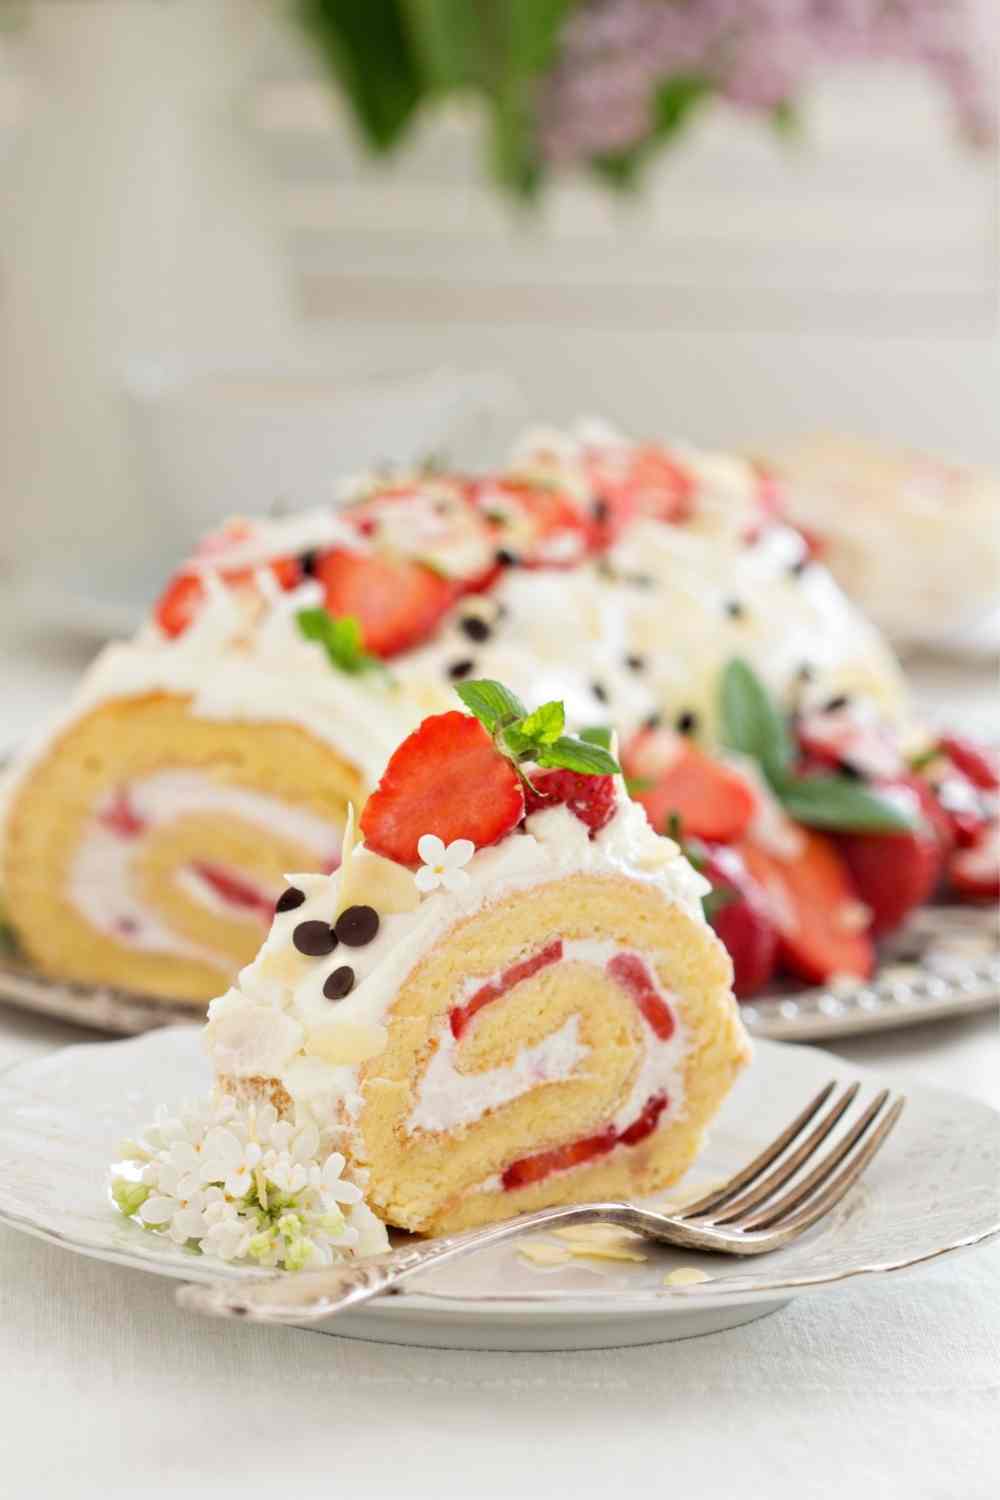 Strawberry cream-filled sandwich cakes